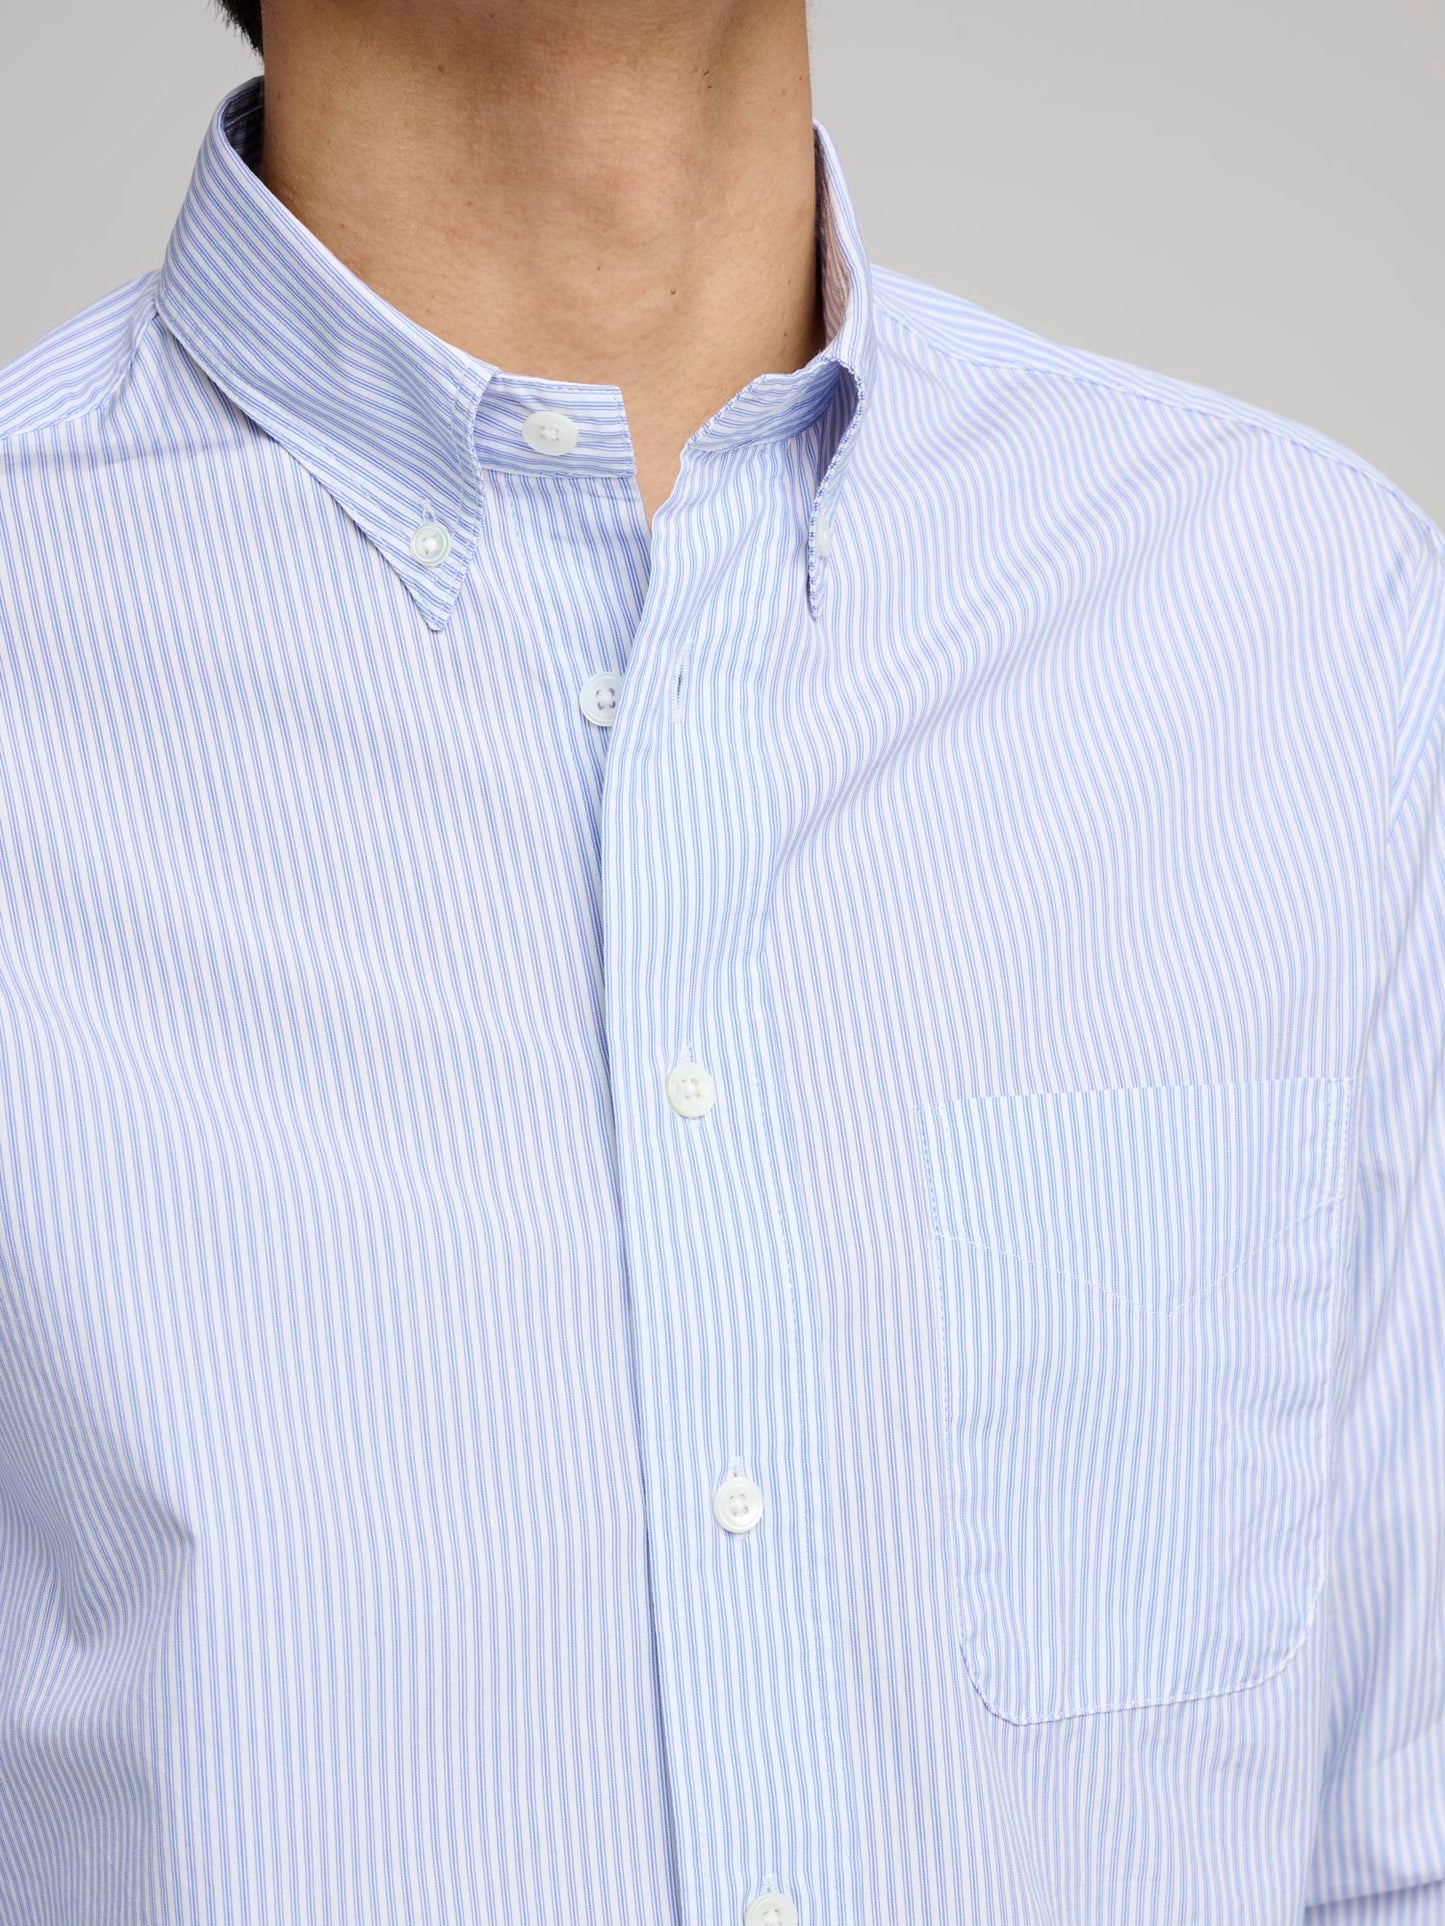 American BD Poplin Shirt, Fine Triple Stripe White/Lt. Blue